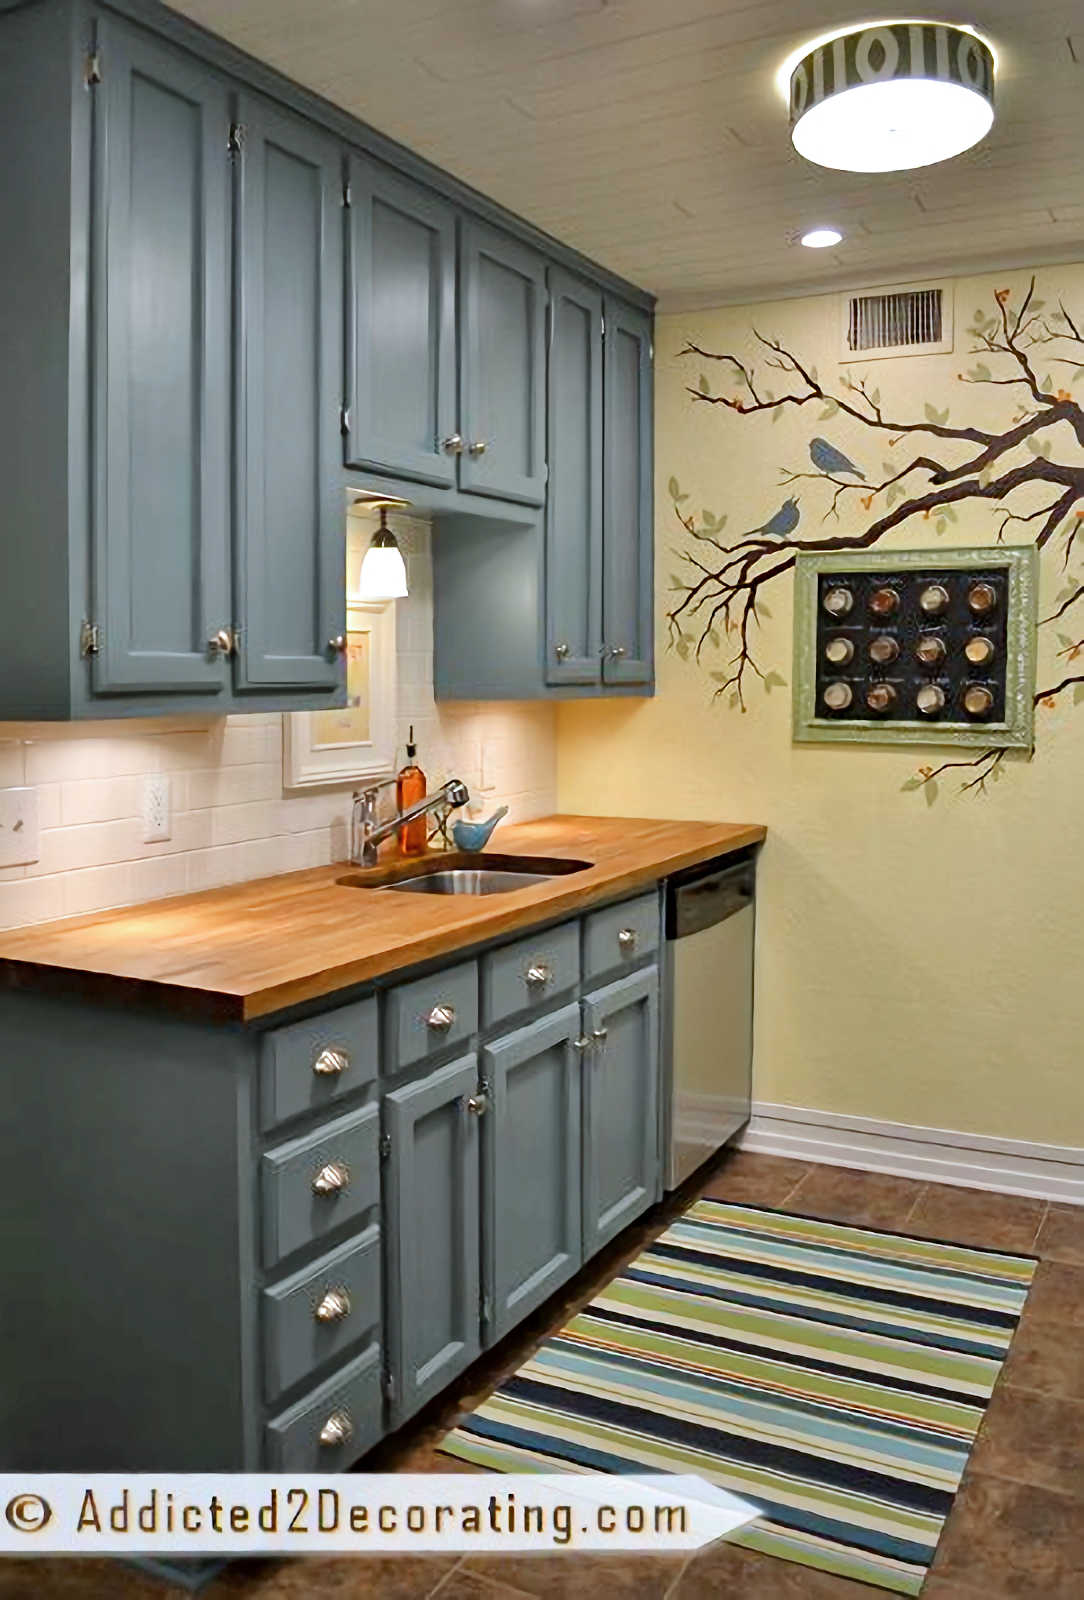 tiny condo kitchen remodel - teal cabinets, butcherblock countertop, white subway tile backsplash, yellow walls